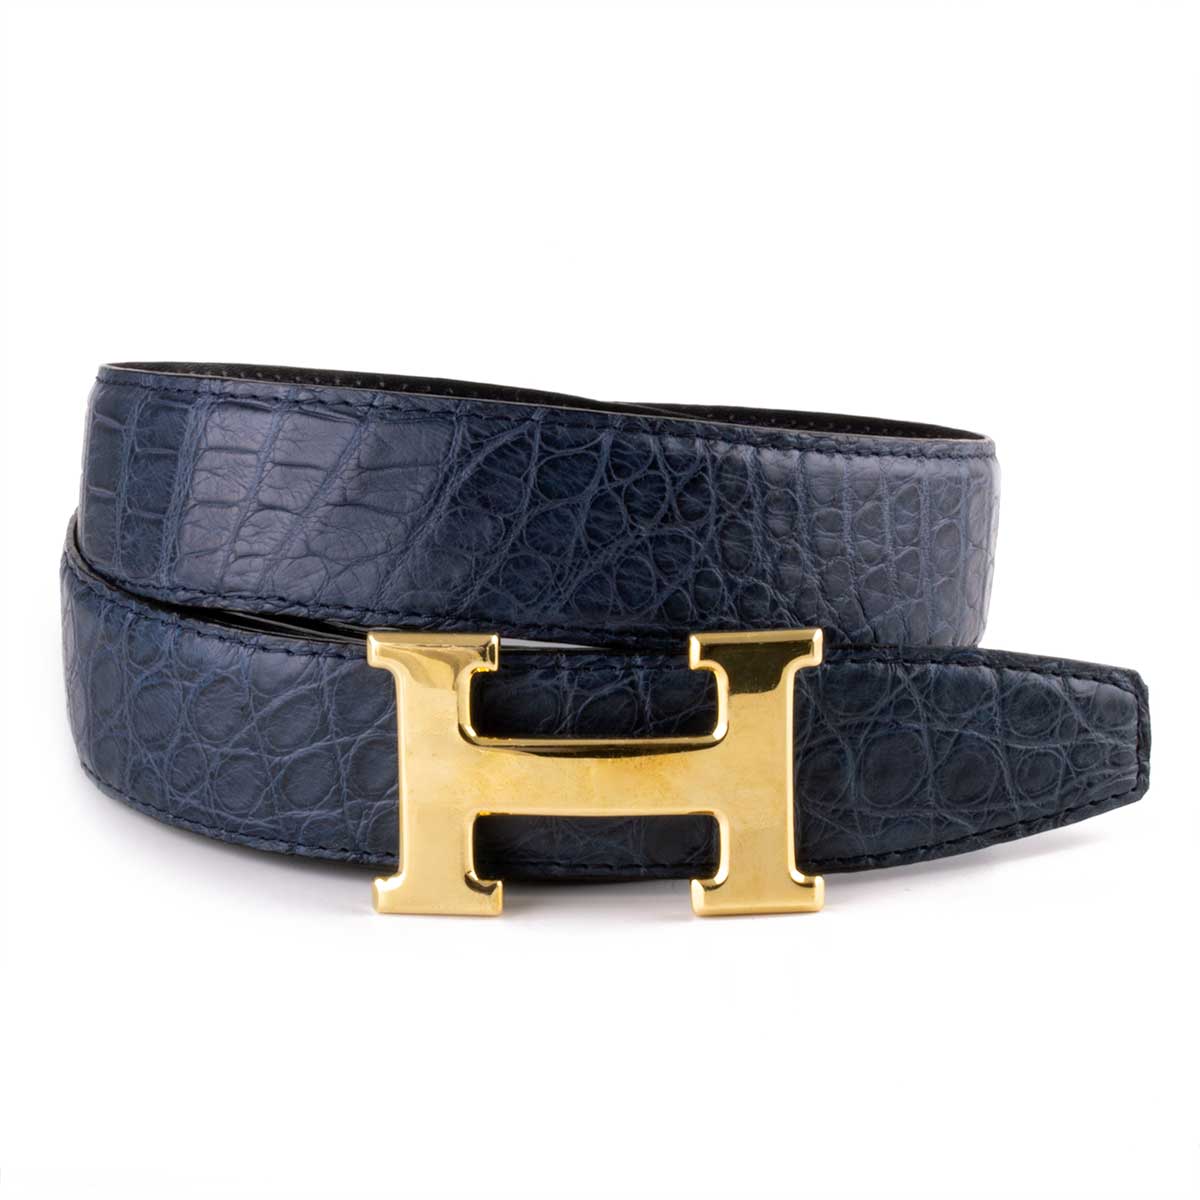 Soft Black Leather Belts – Metal Belt Buckles, Accessories & Home